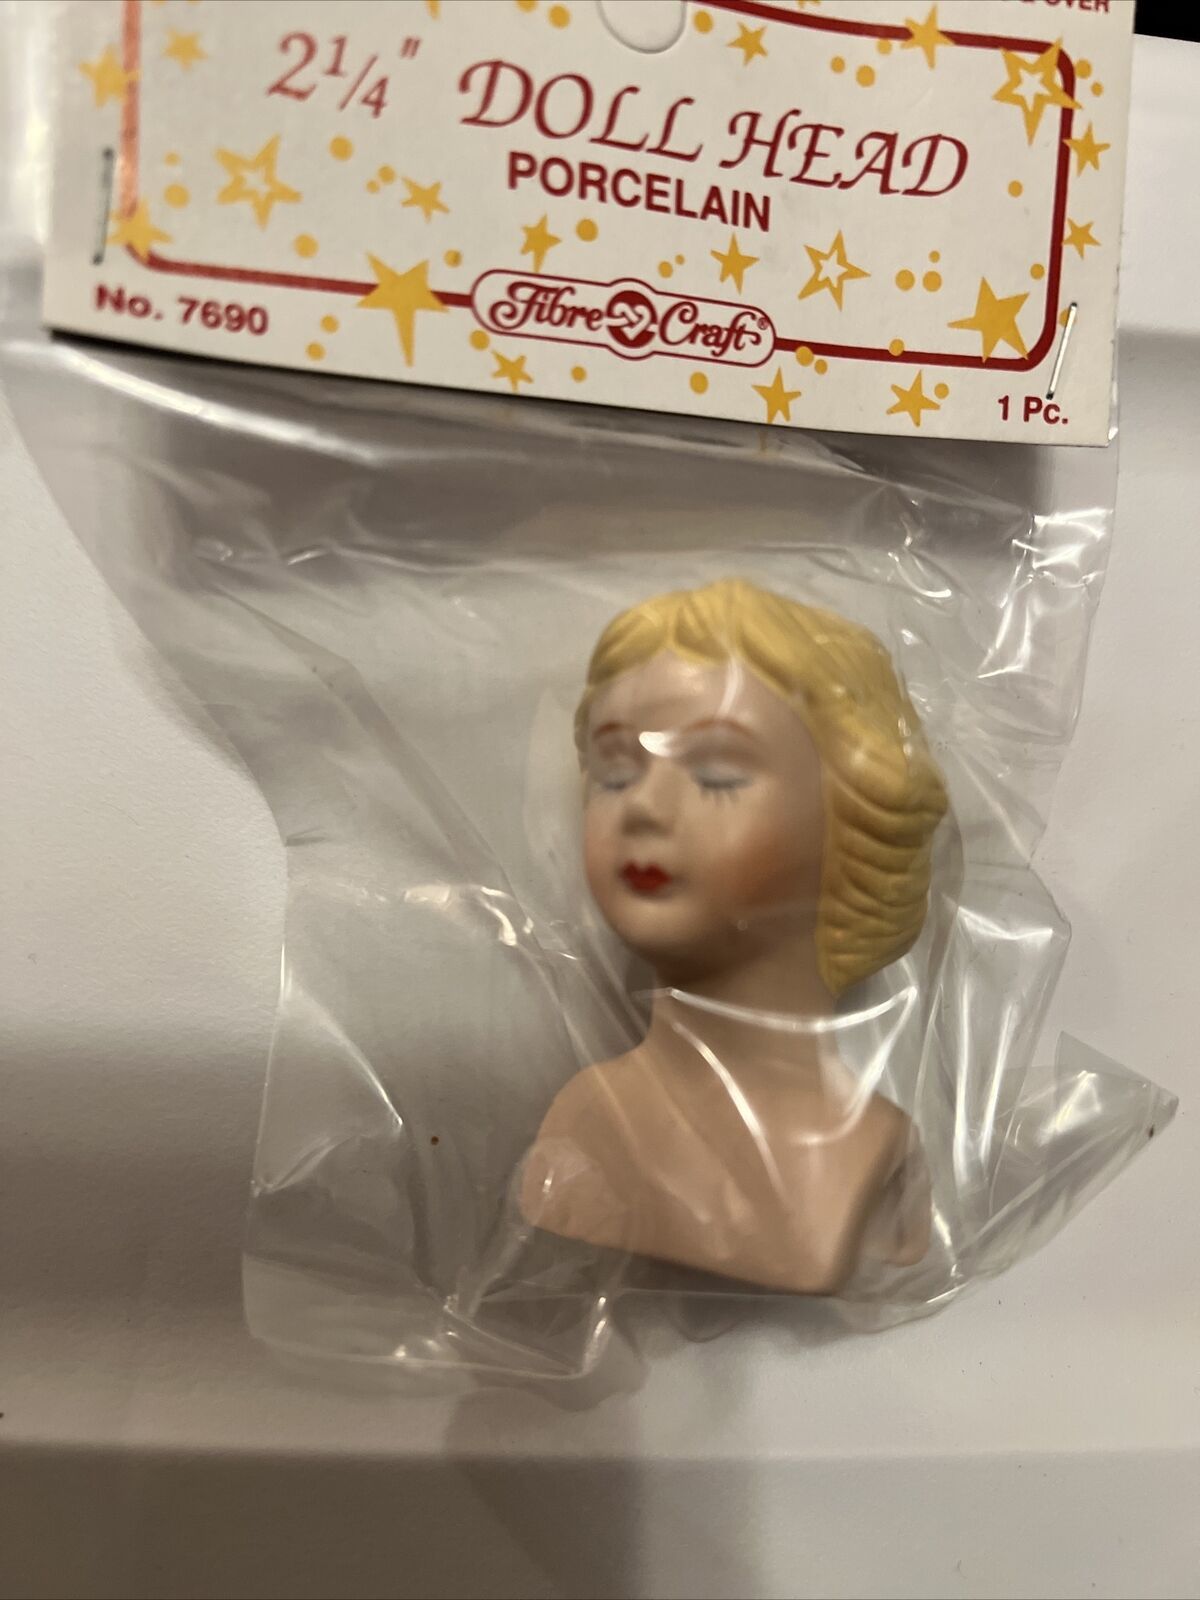 Porcelain Doll Head Blonde Pink Lips Woman Lady Angel 2 1/4 " #7690 Fibre Craft - $3.25